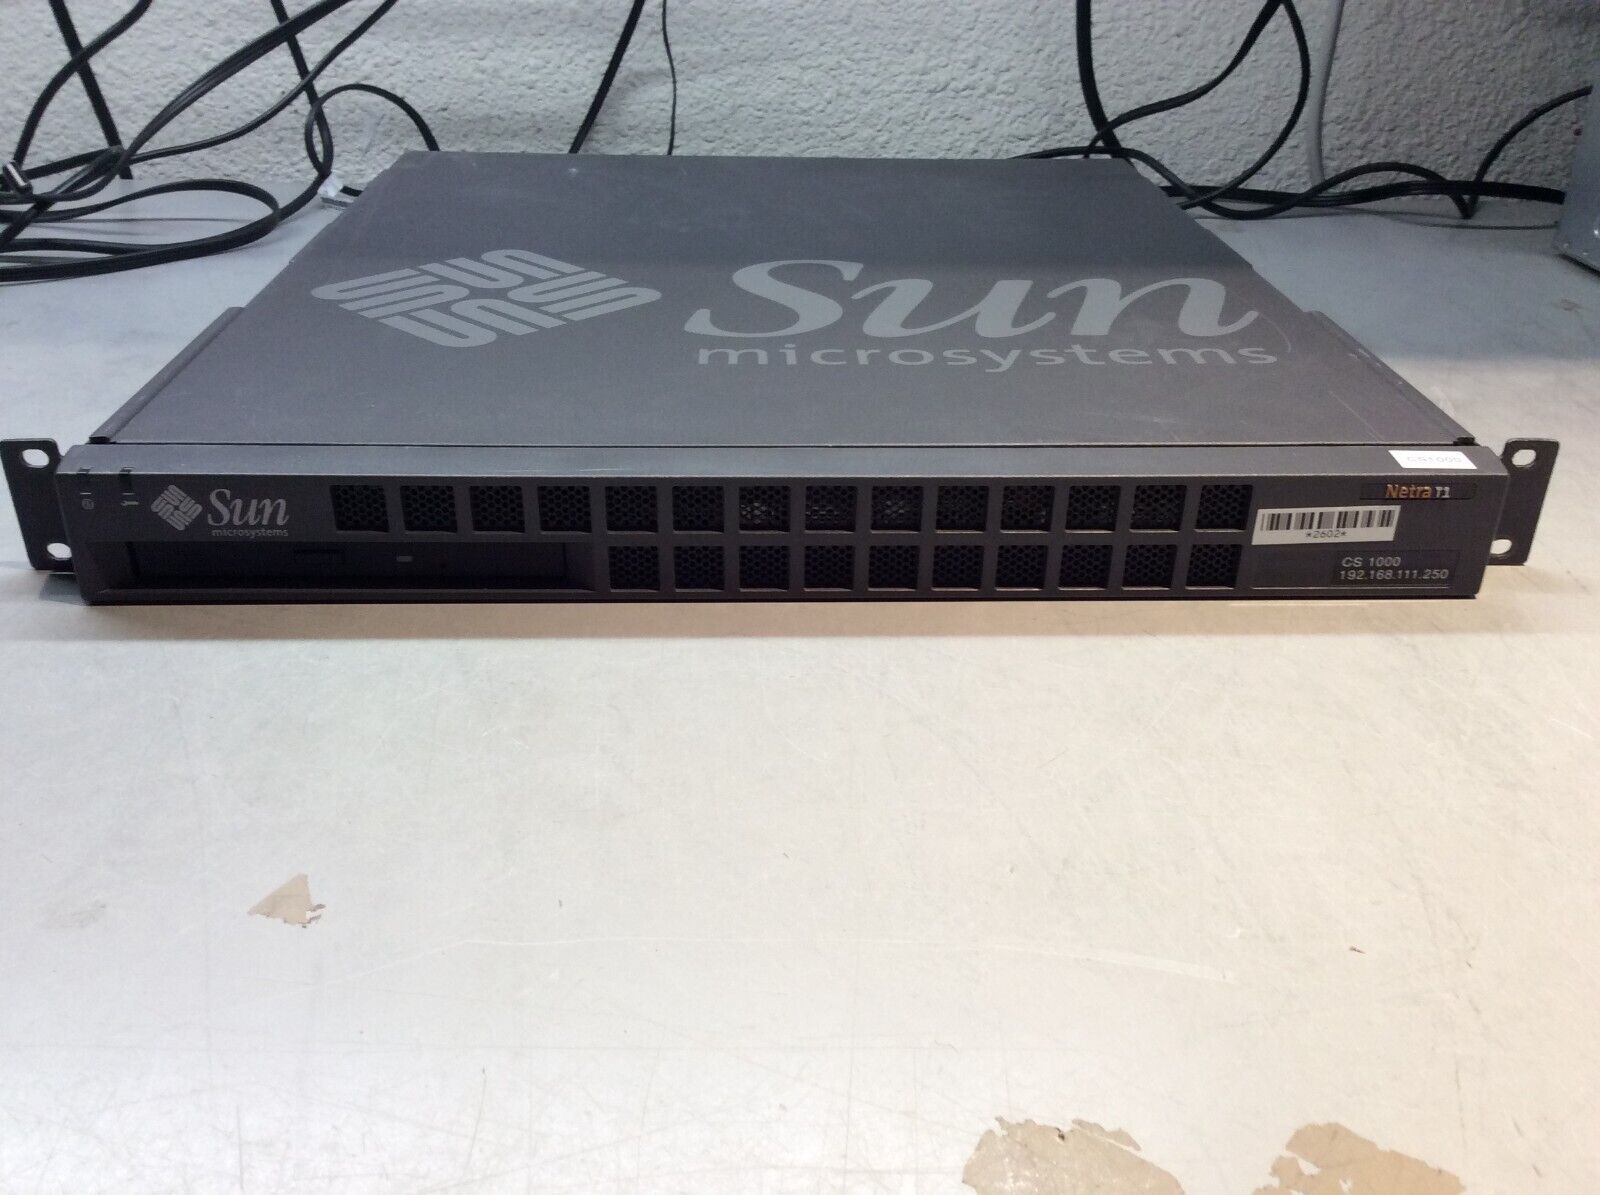 Sun Microsystems Netra T1 computer server